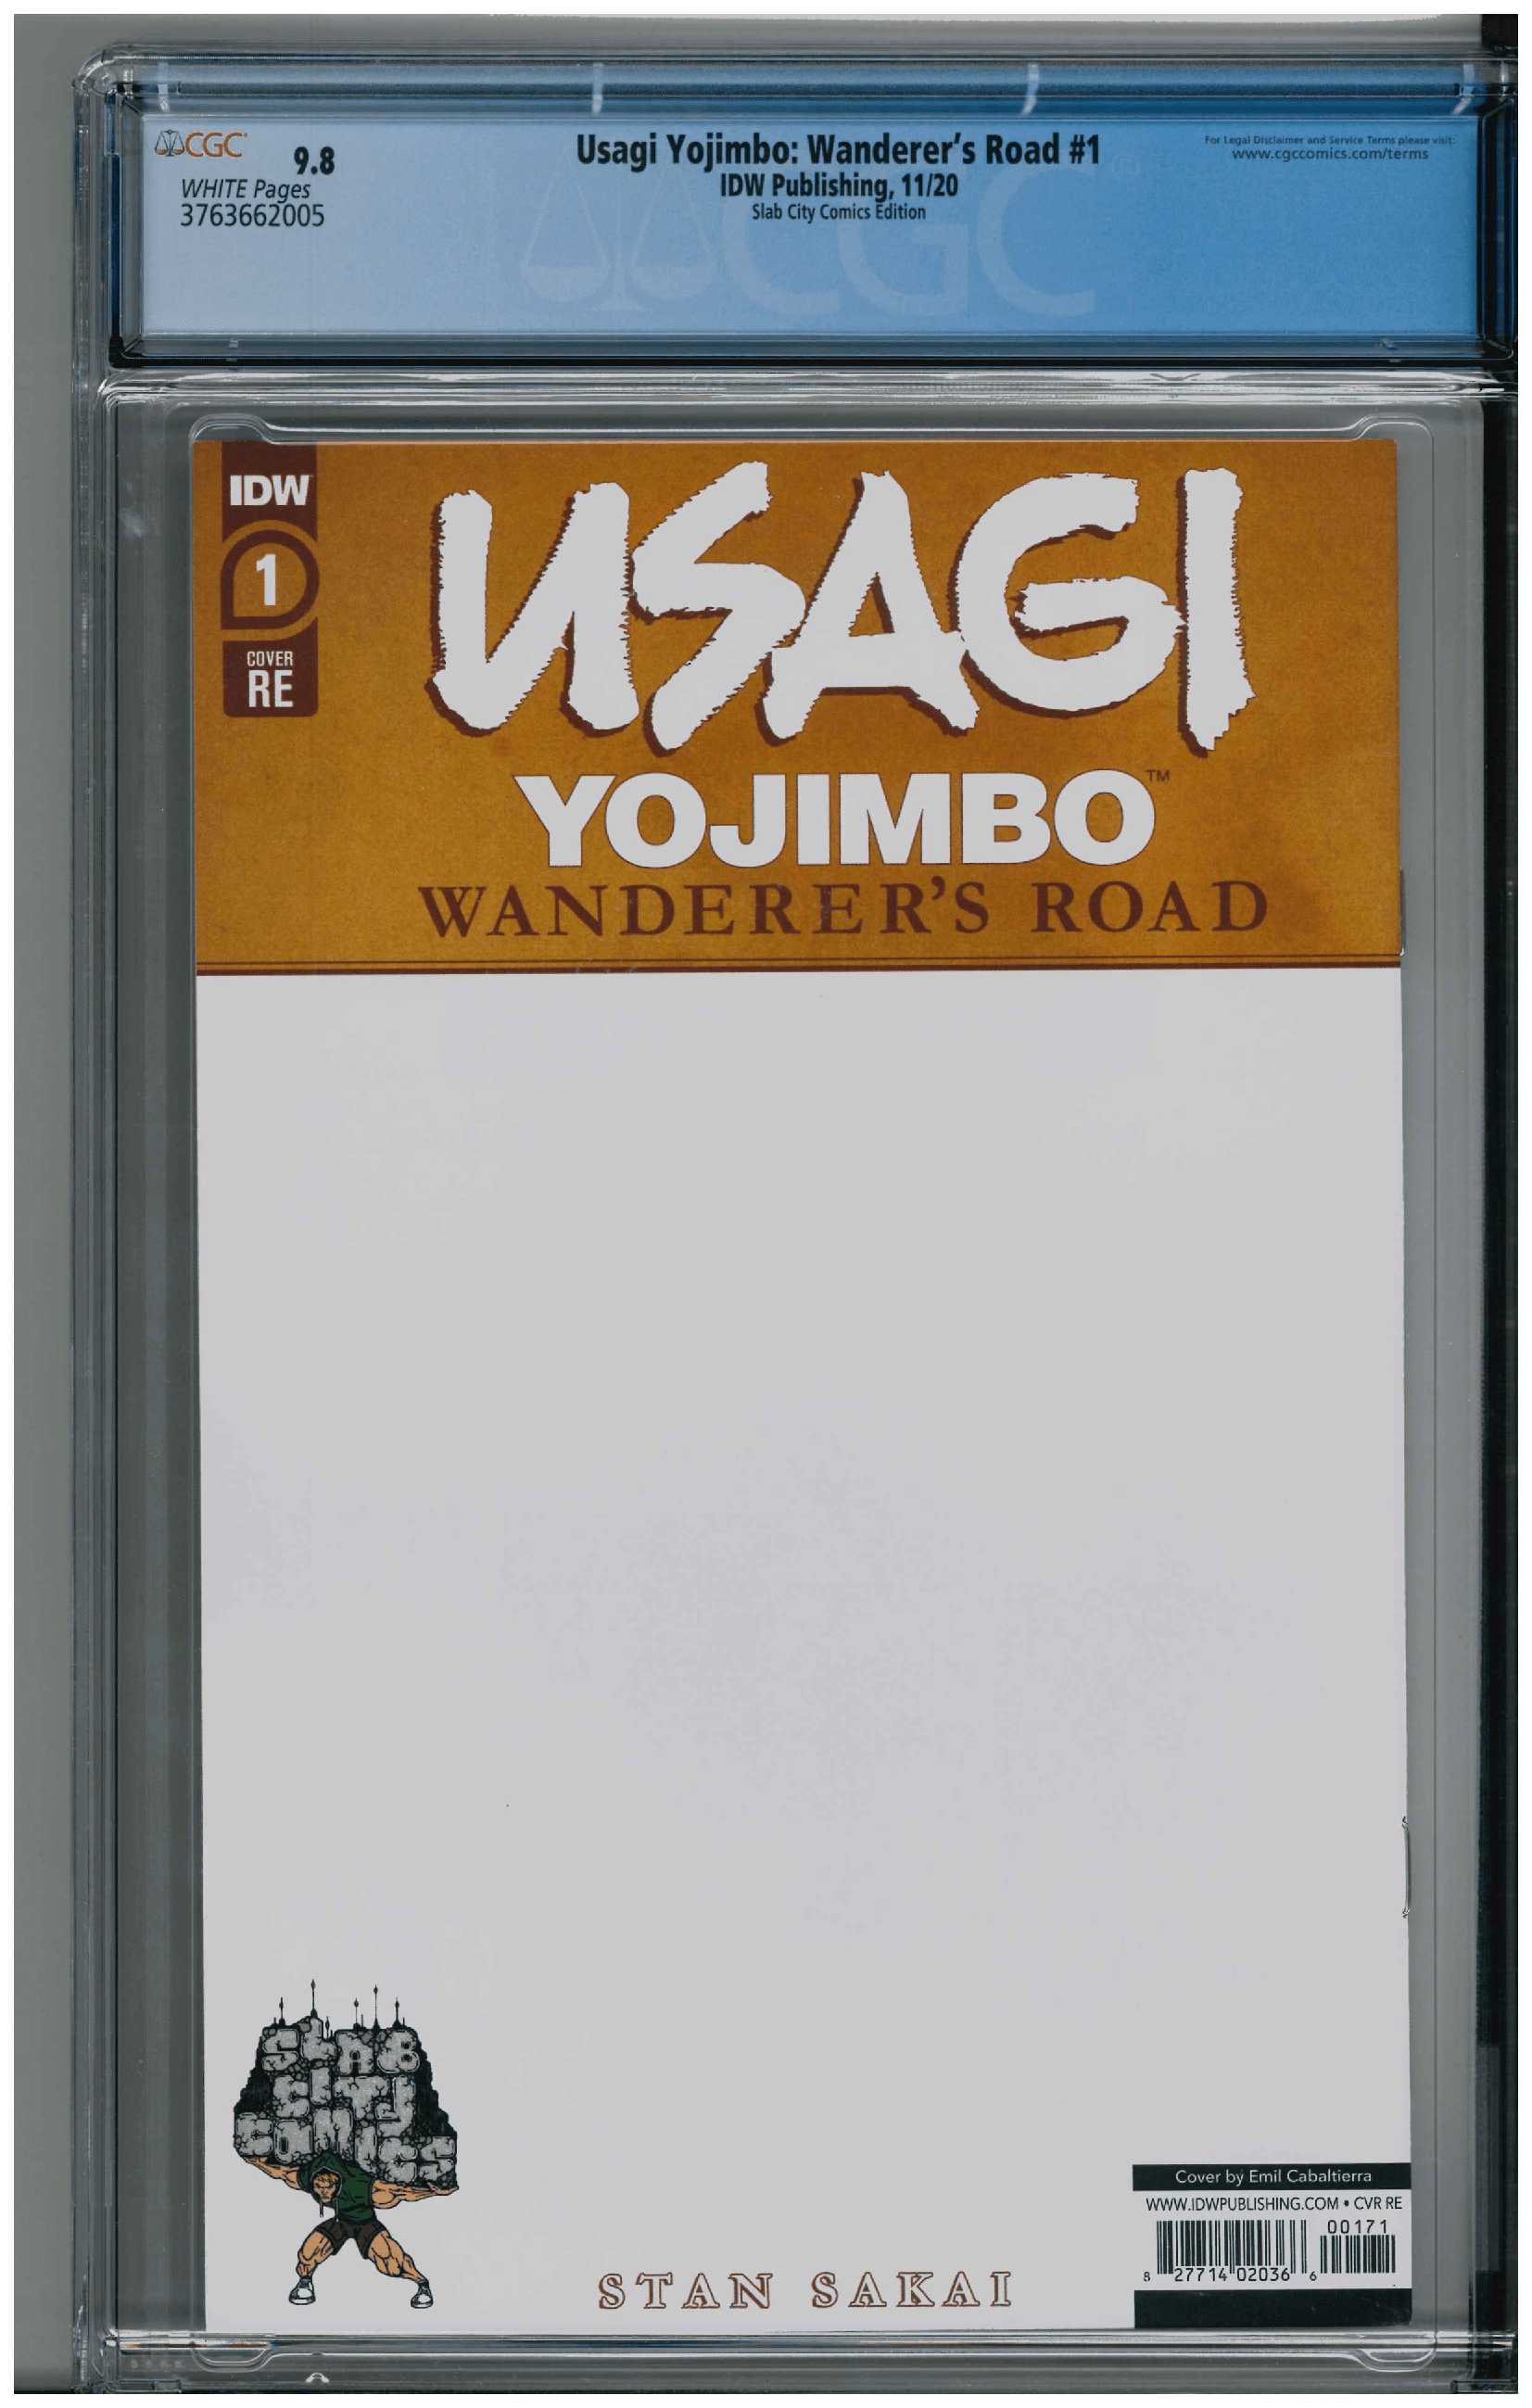 Usagi Yojimbo: Wanderer's Road #1 backside